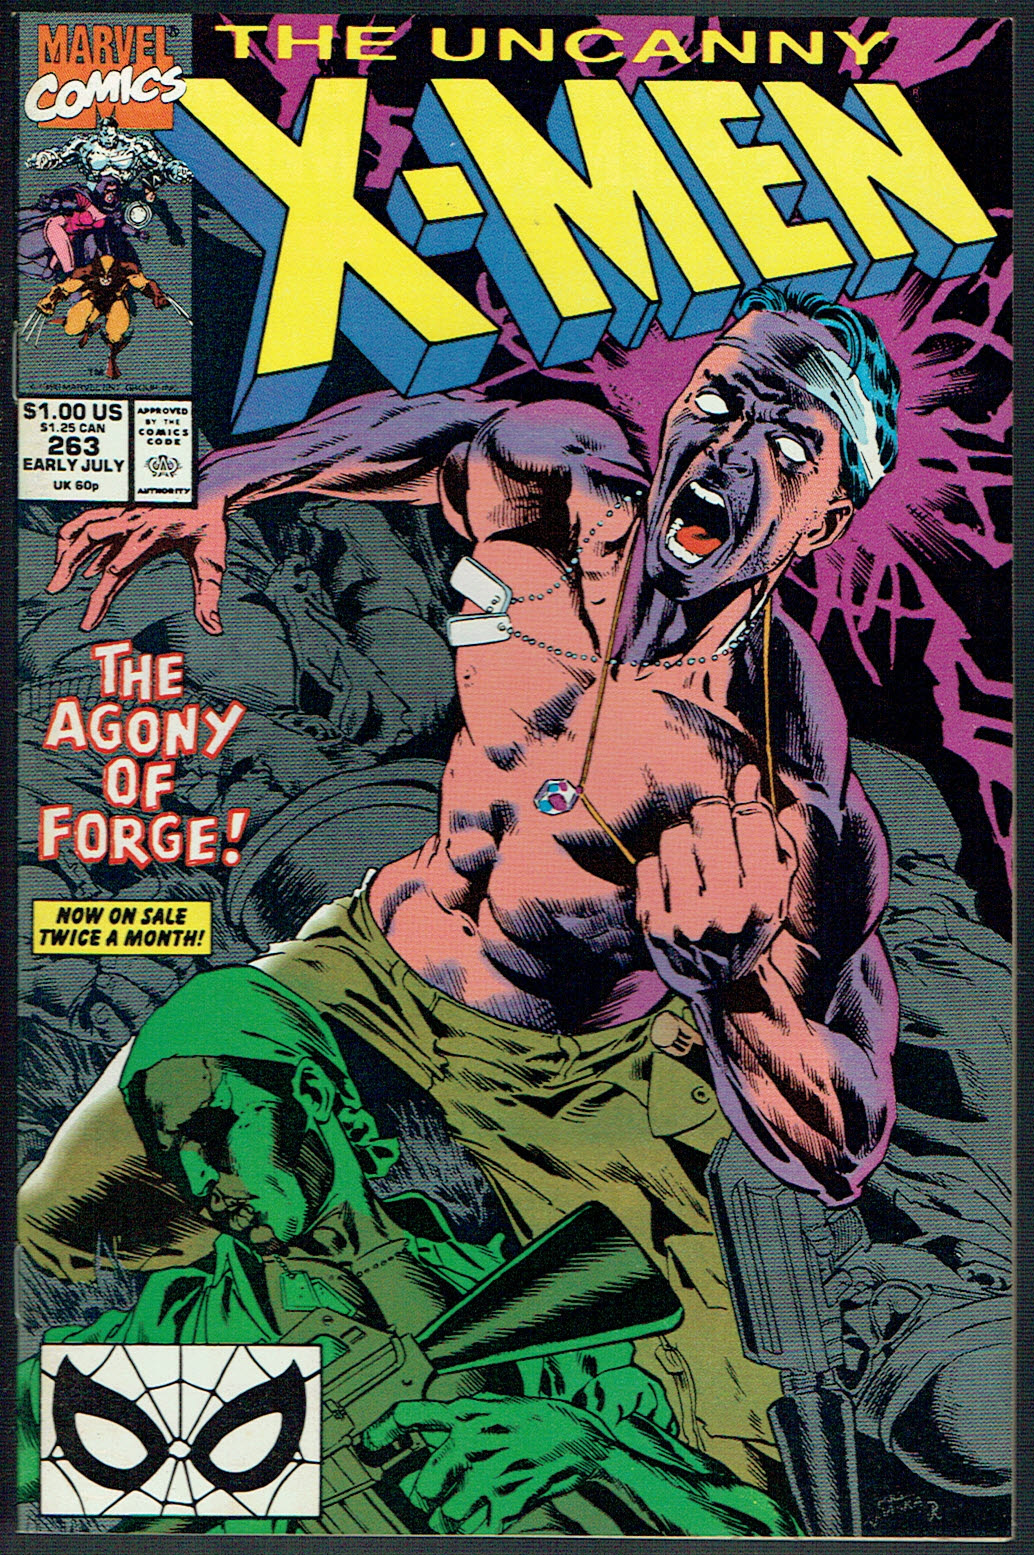 Uncanny X-Men #263